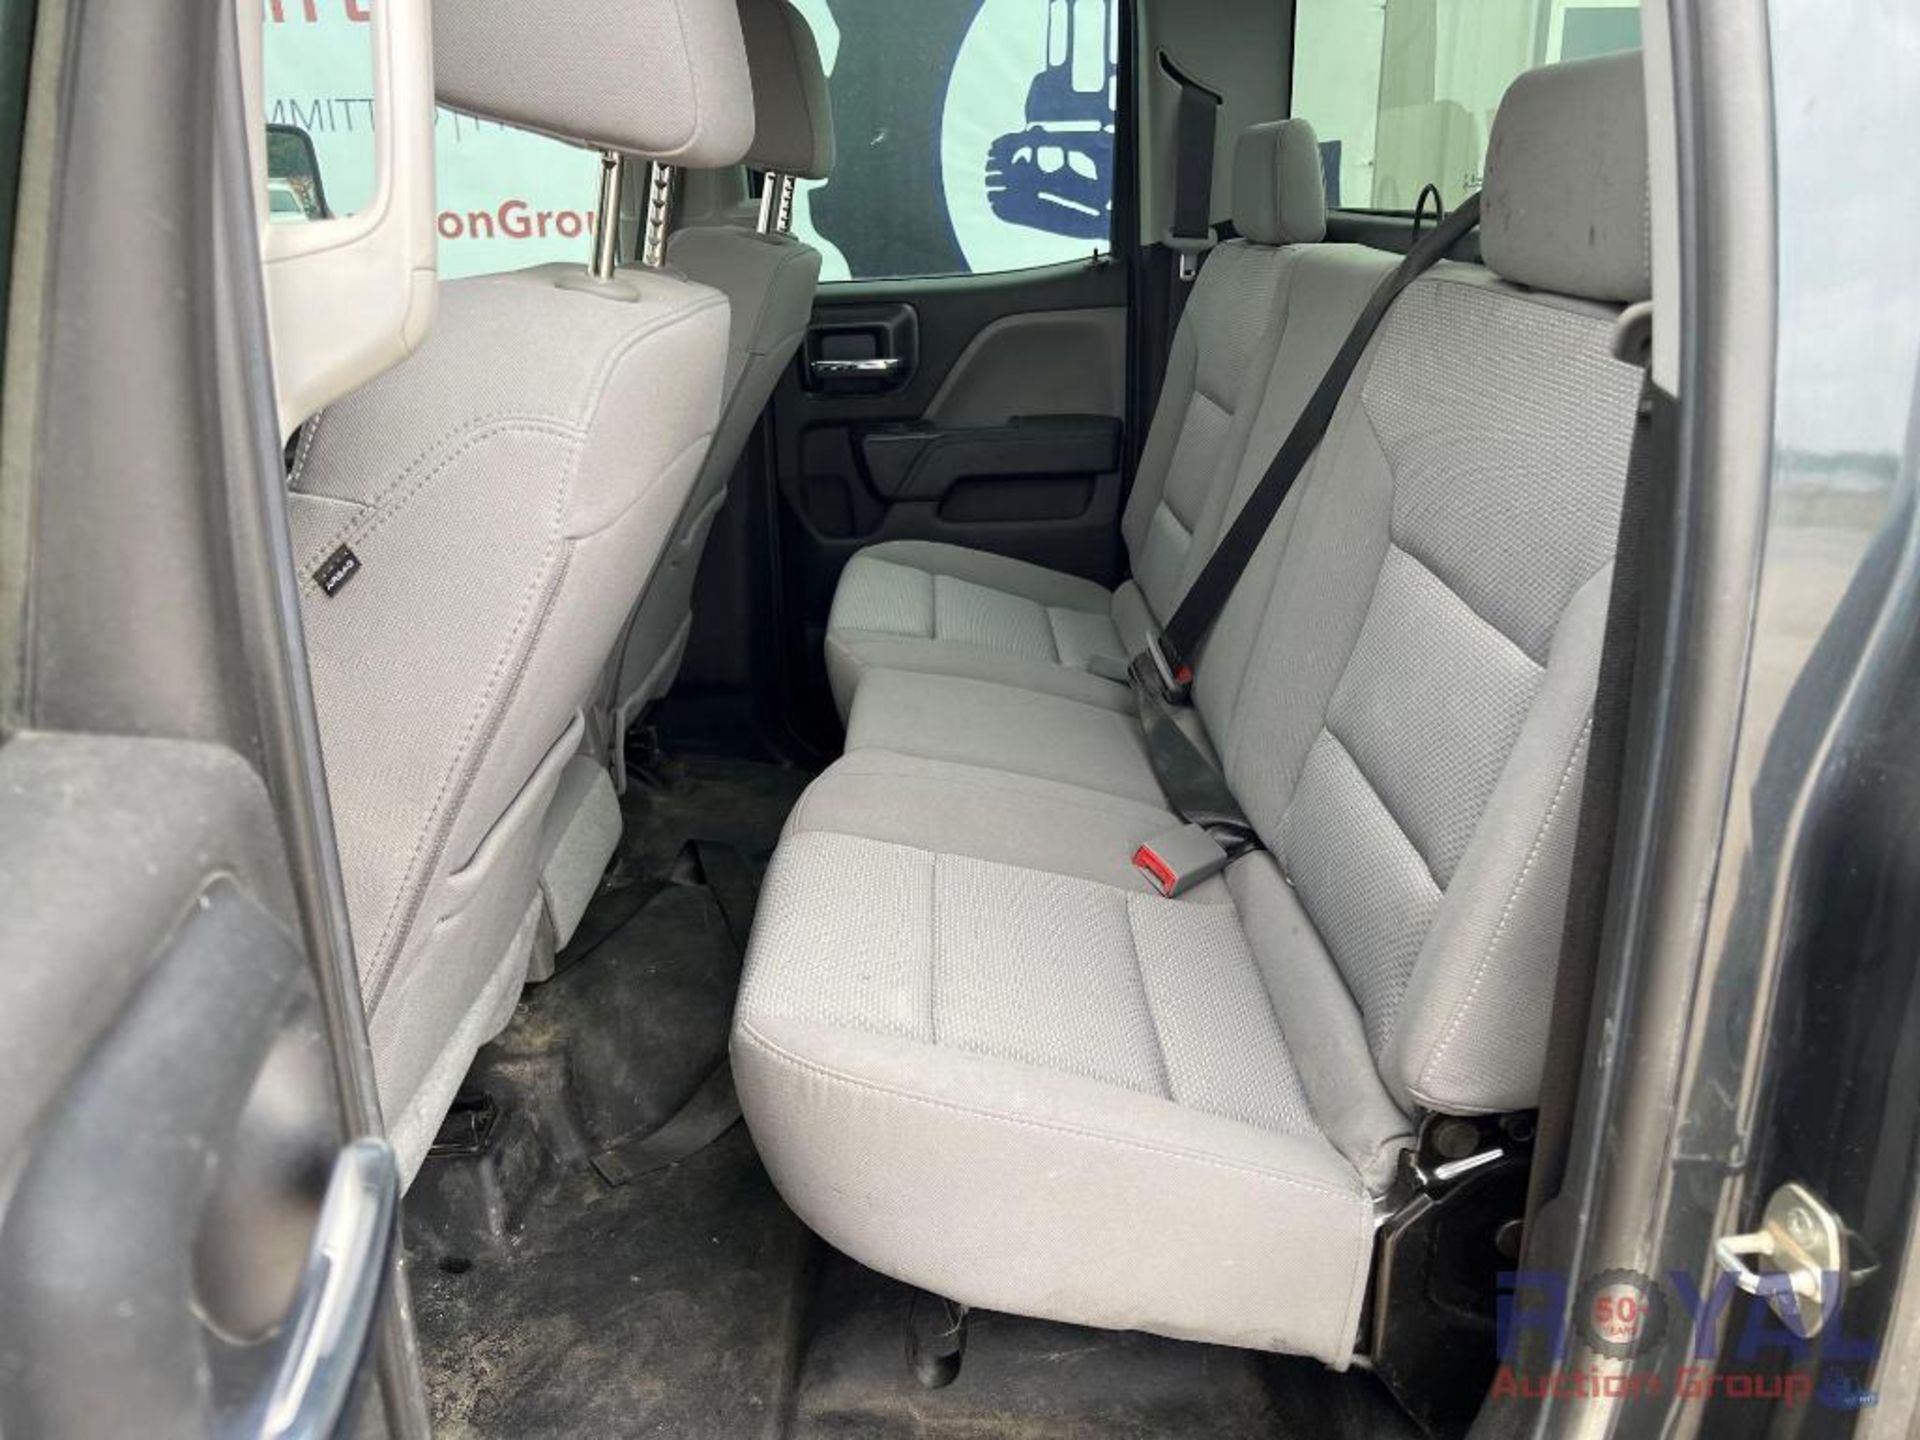 2018 Chevrolet Silverado 4x4 Crew Cab Pickup Truck - Image 31 of 51